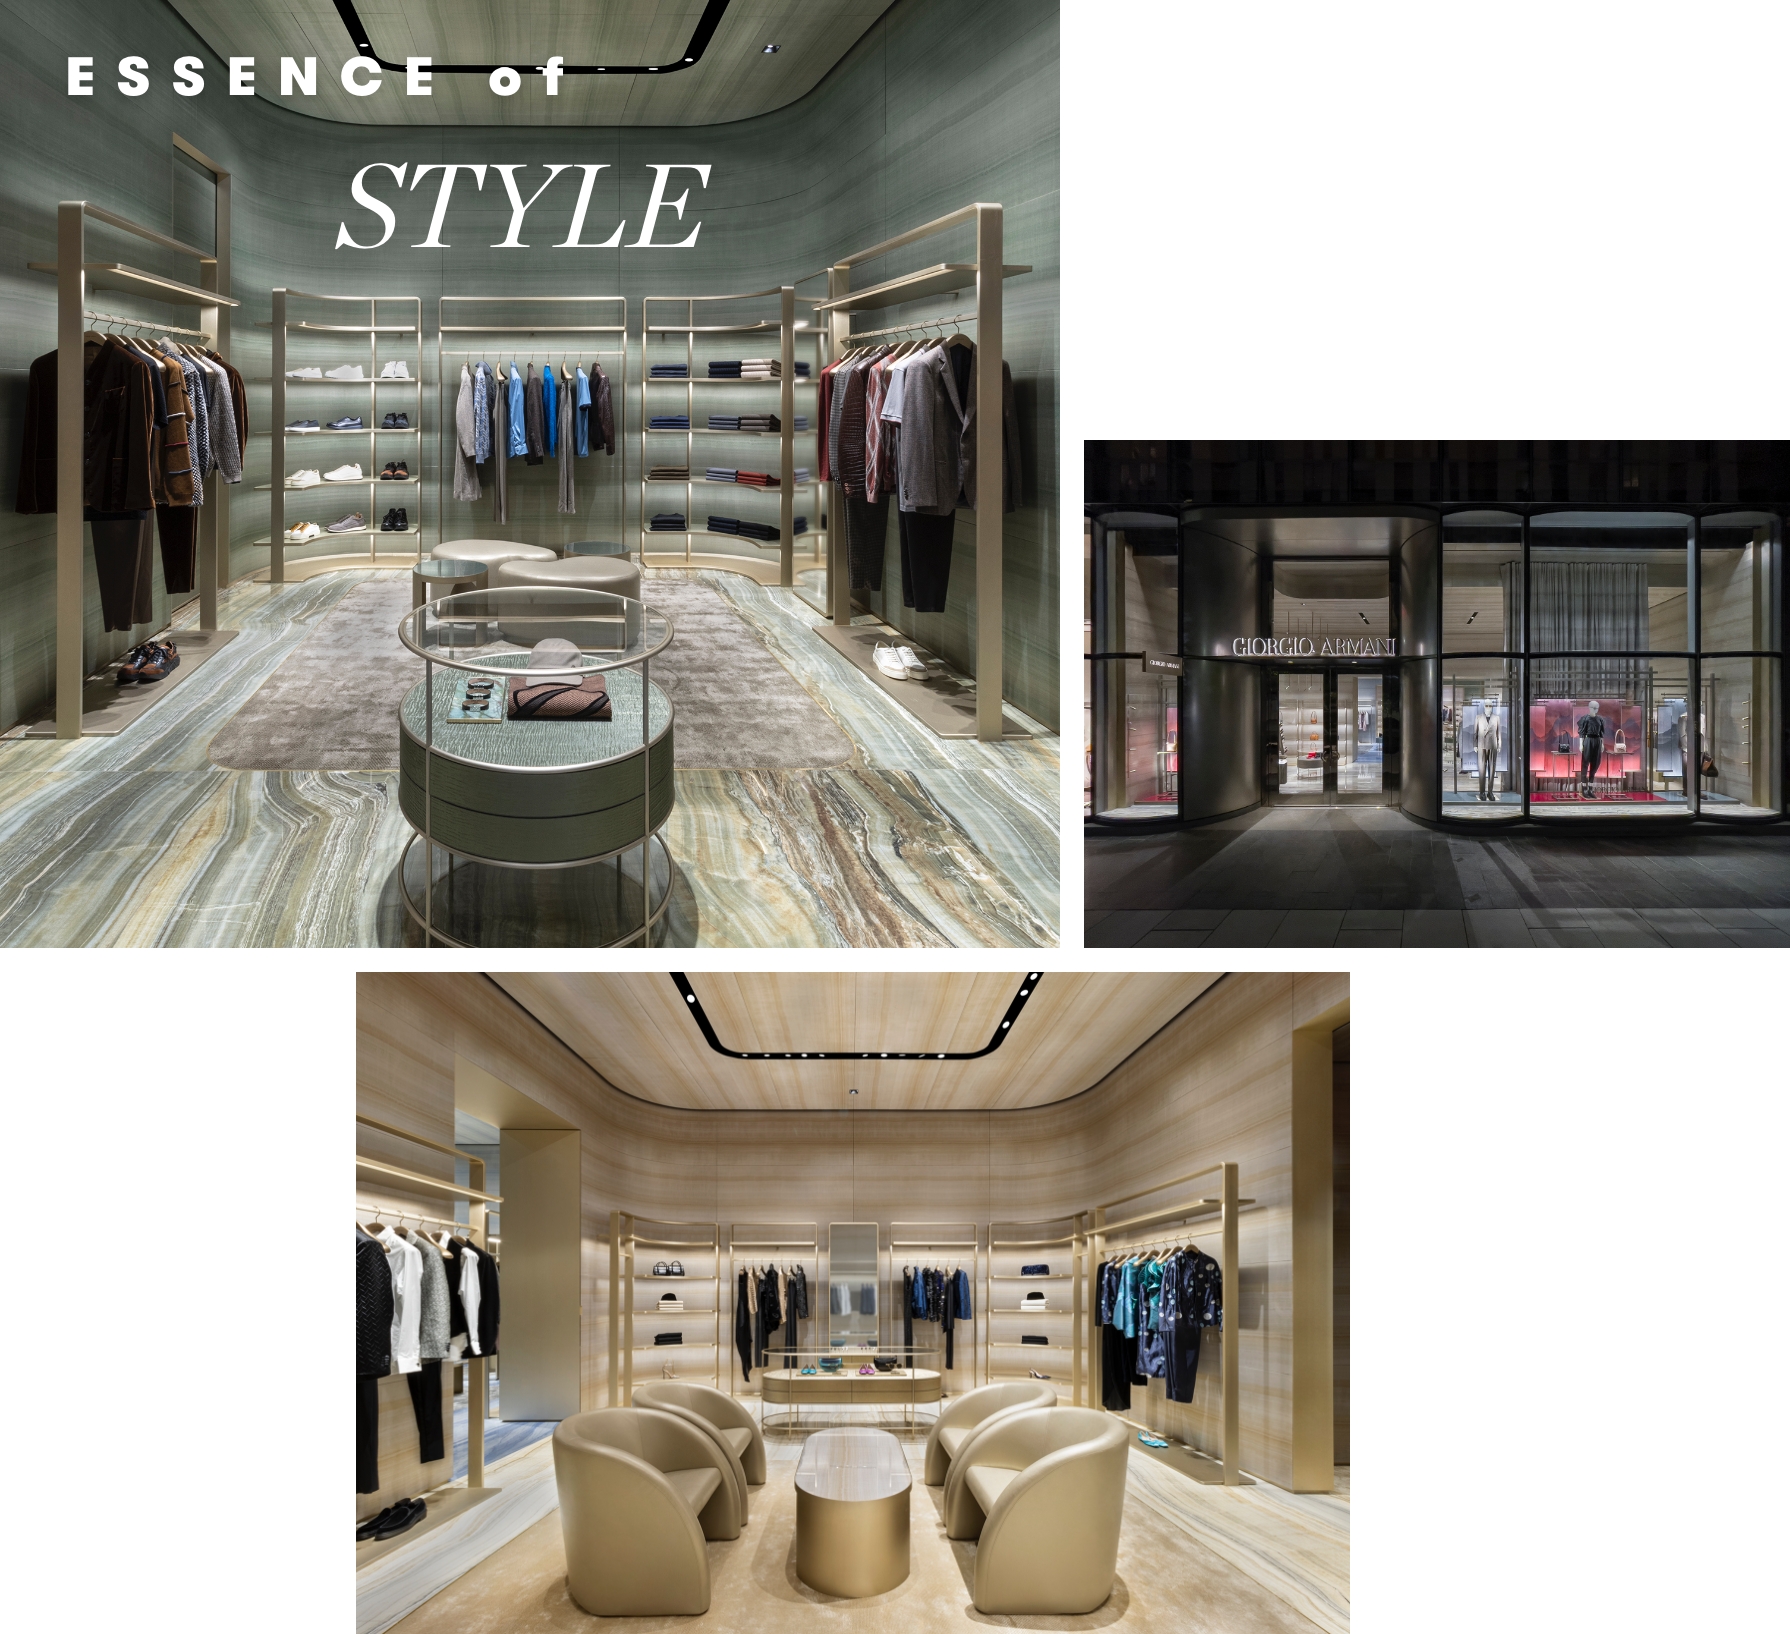 Essence of Style: Interior photos from Giorgio Armani's new boutique in Washington DC at CityCenterDC